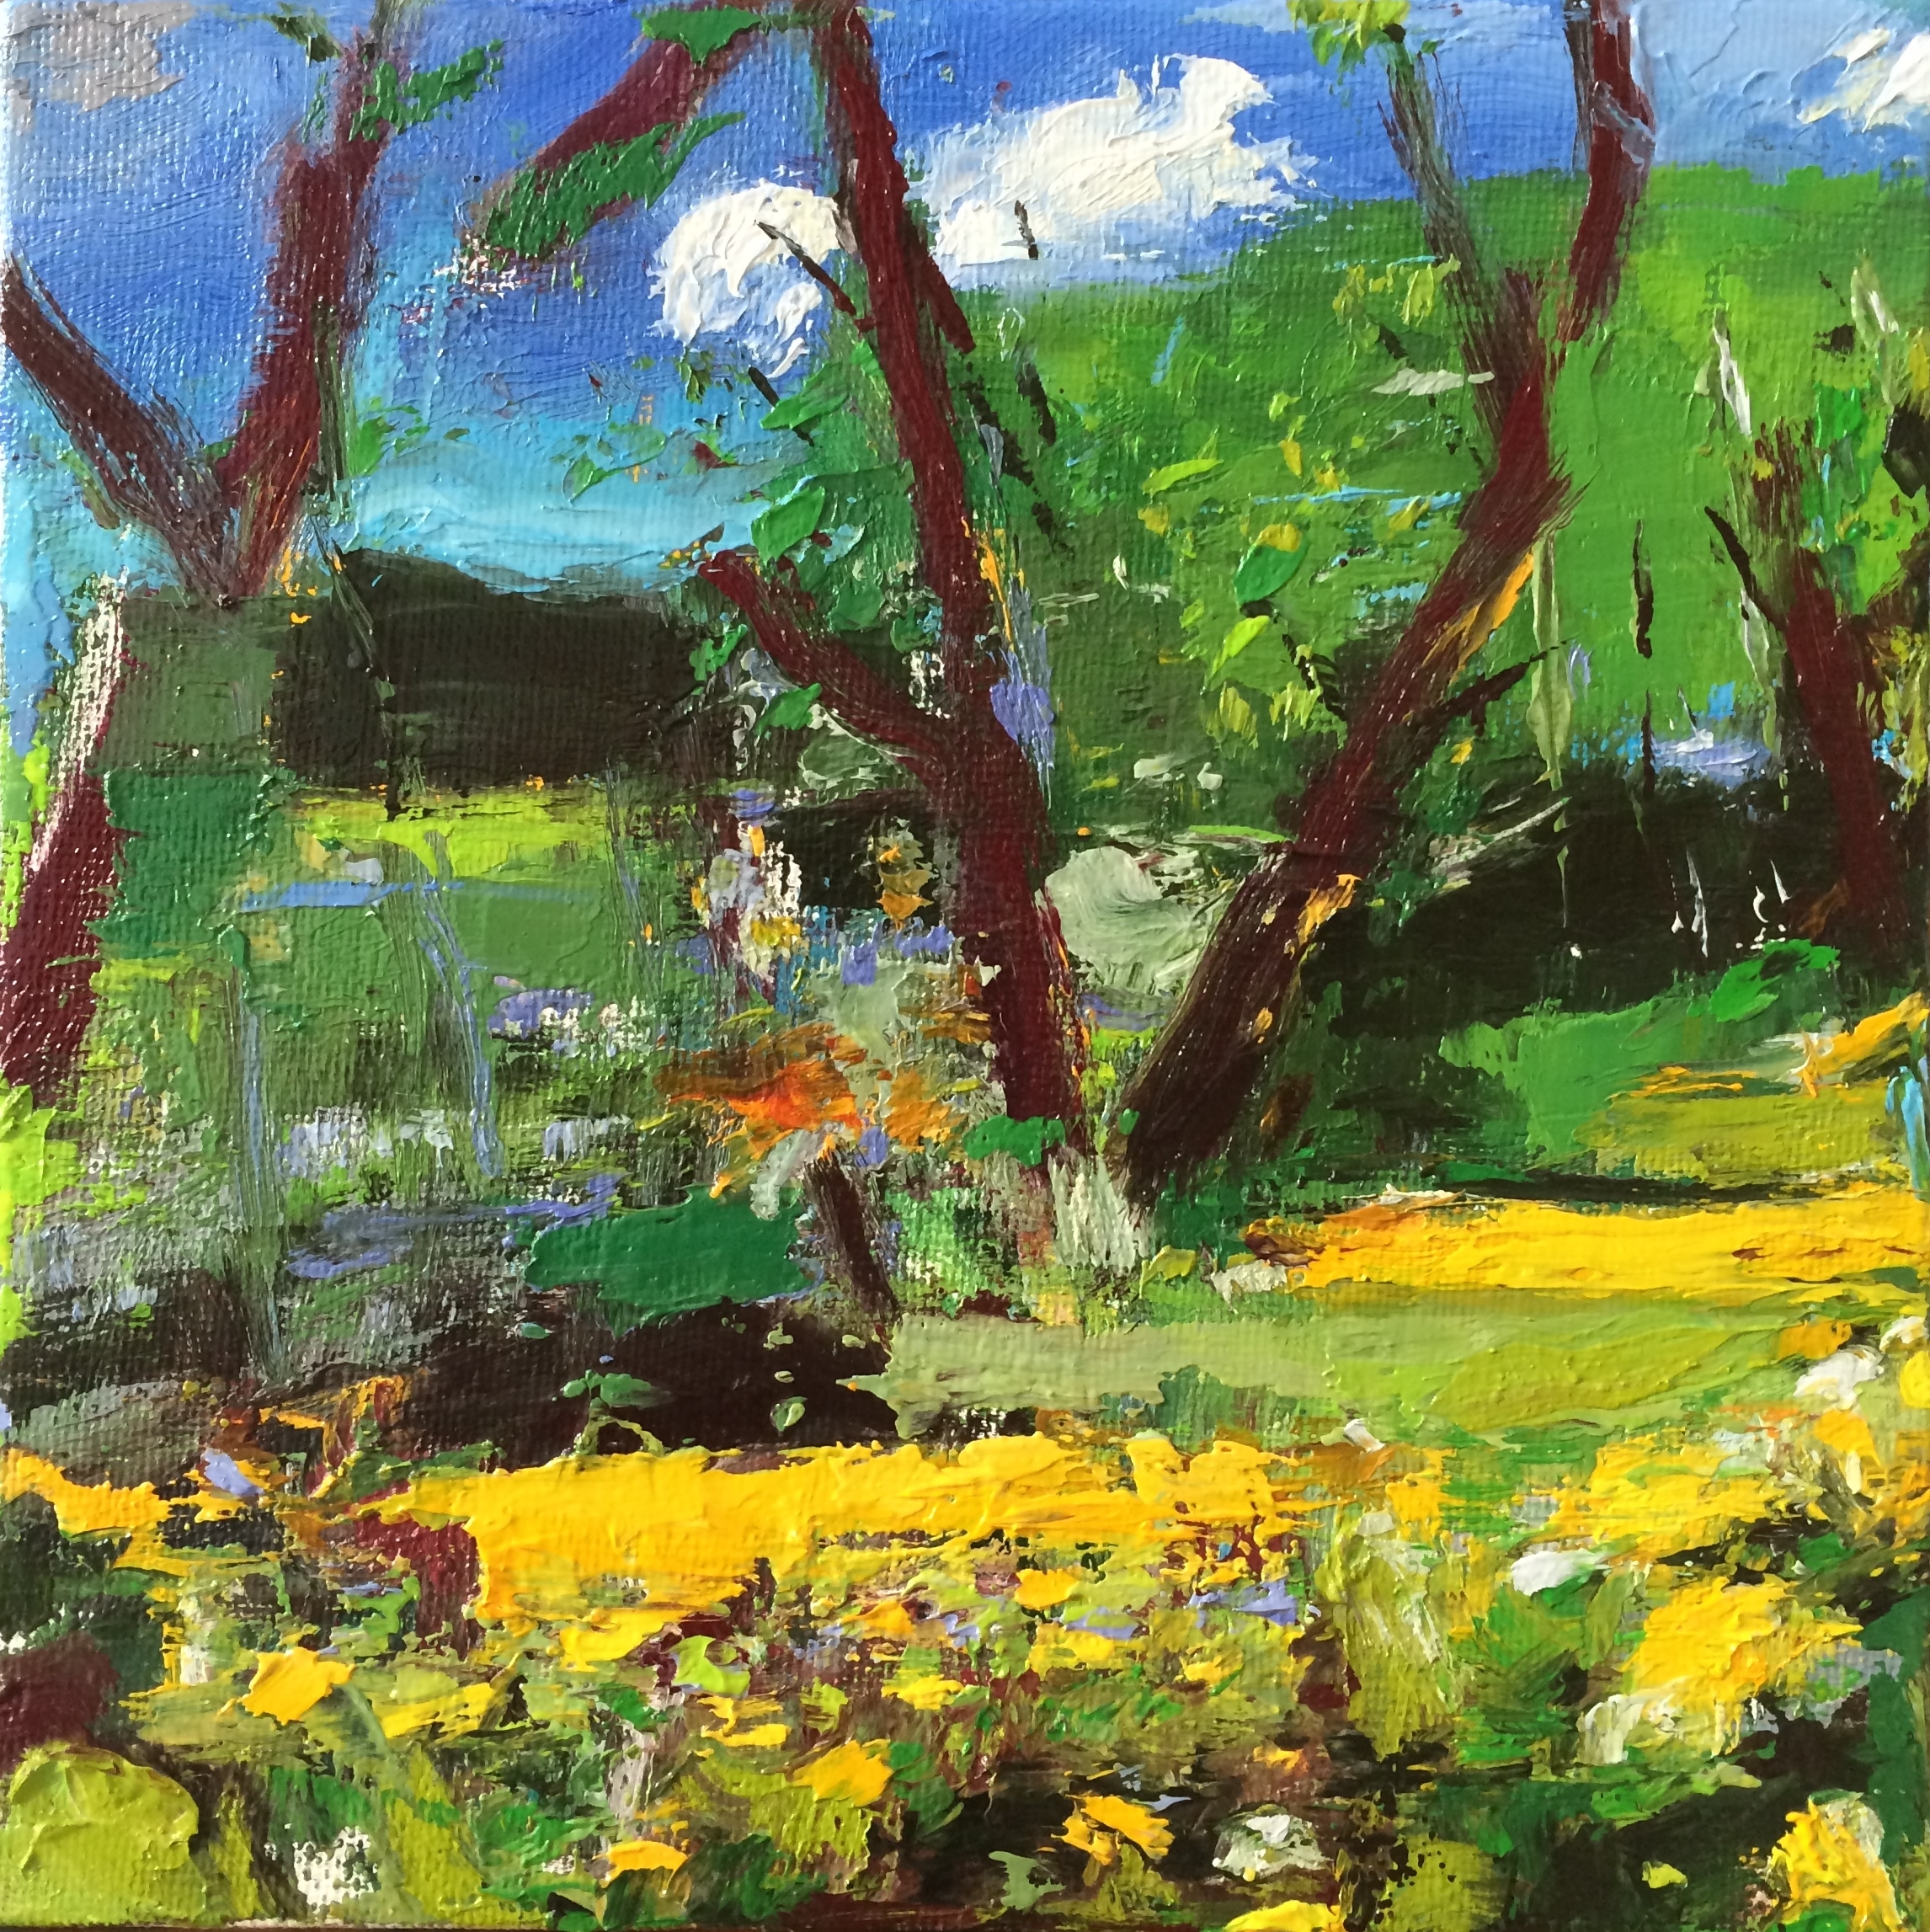  "Dandelions"  oil on canvas  6"x6"  2016 